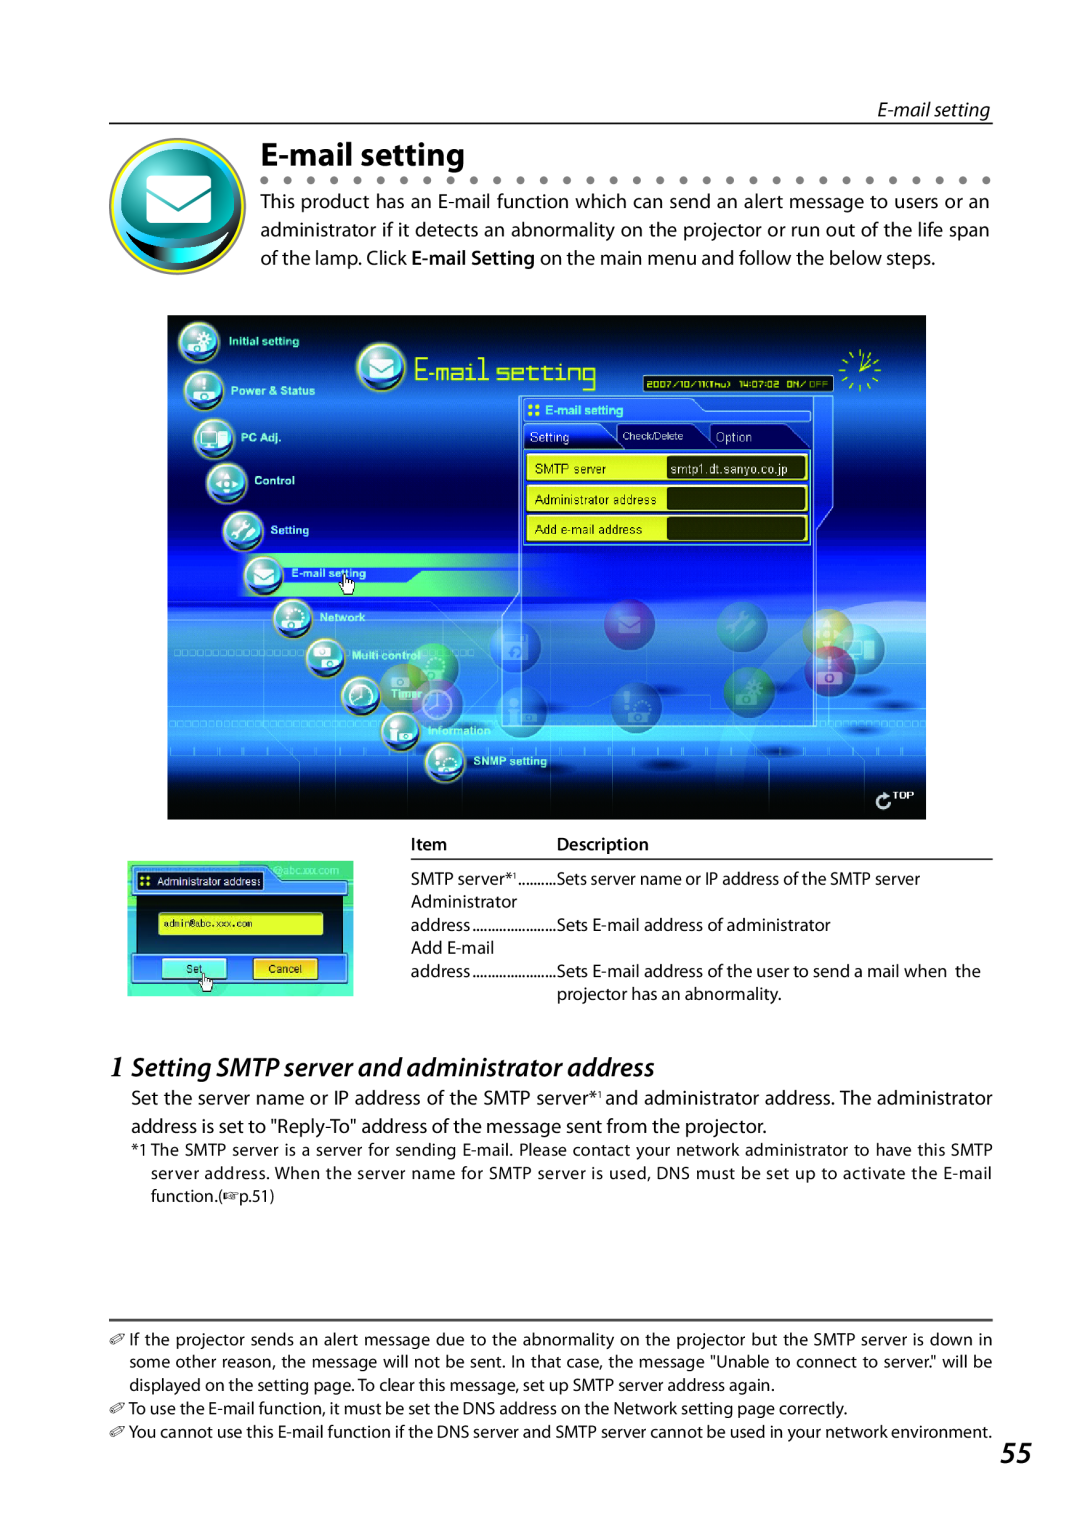 Sanyo QXXAVC922---P E-mailsetting, 1Setting SMTP server and administrator address, Item, Description, Administrator 